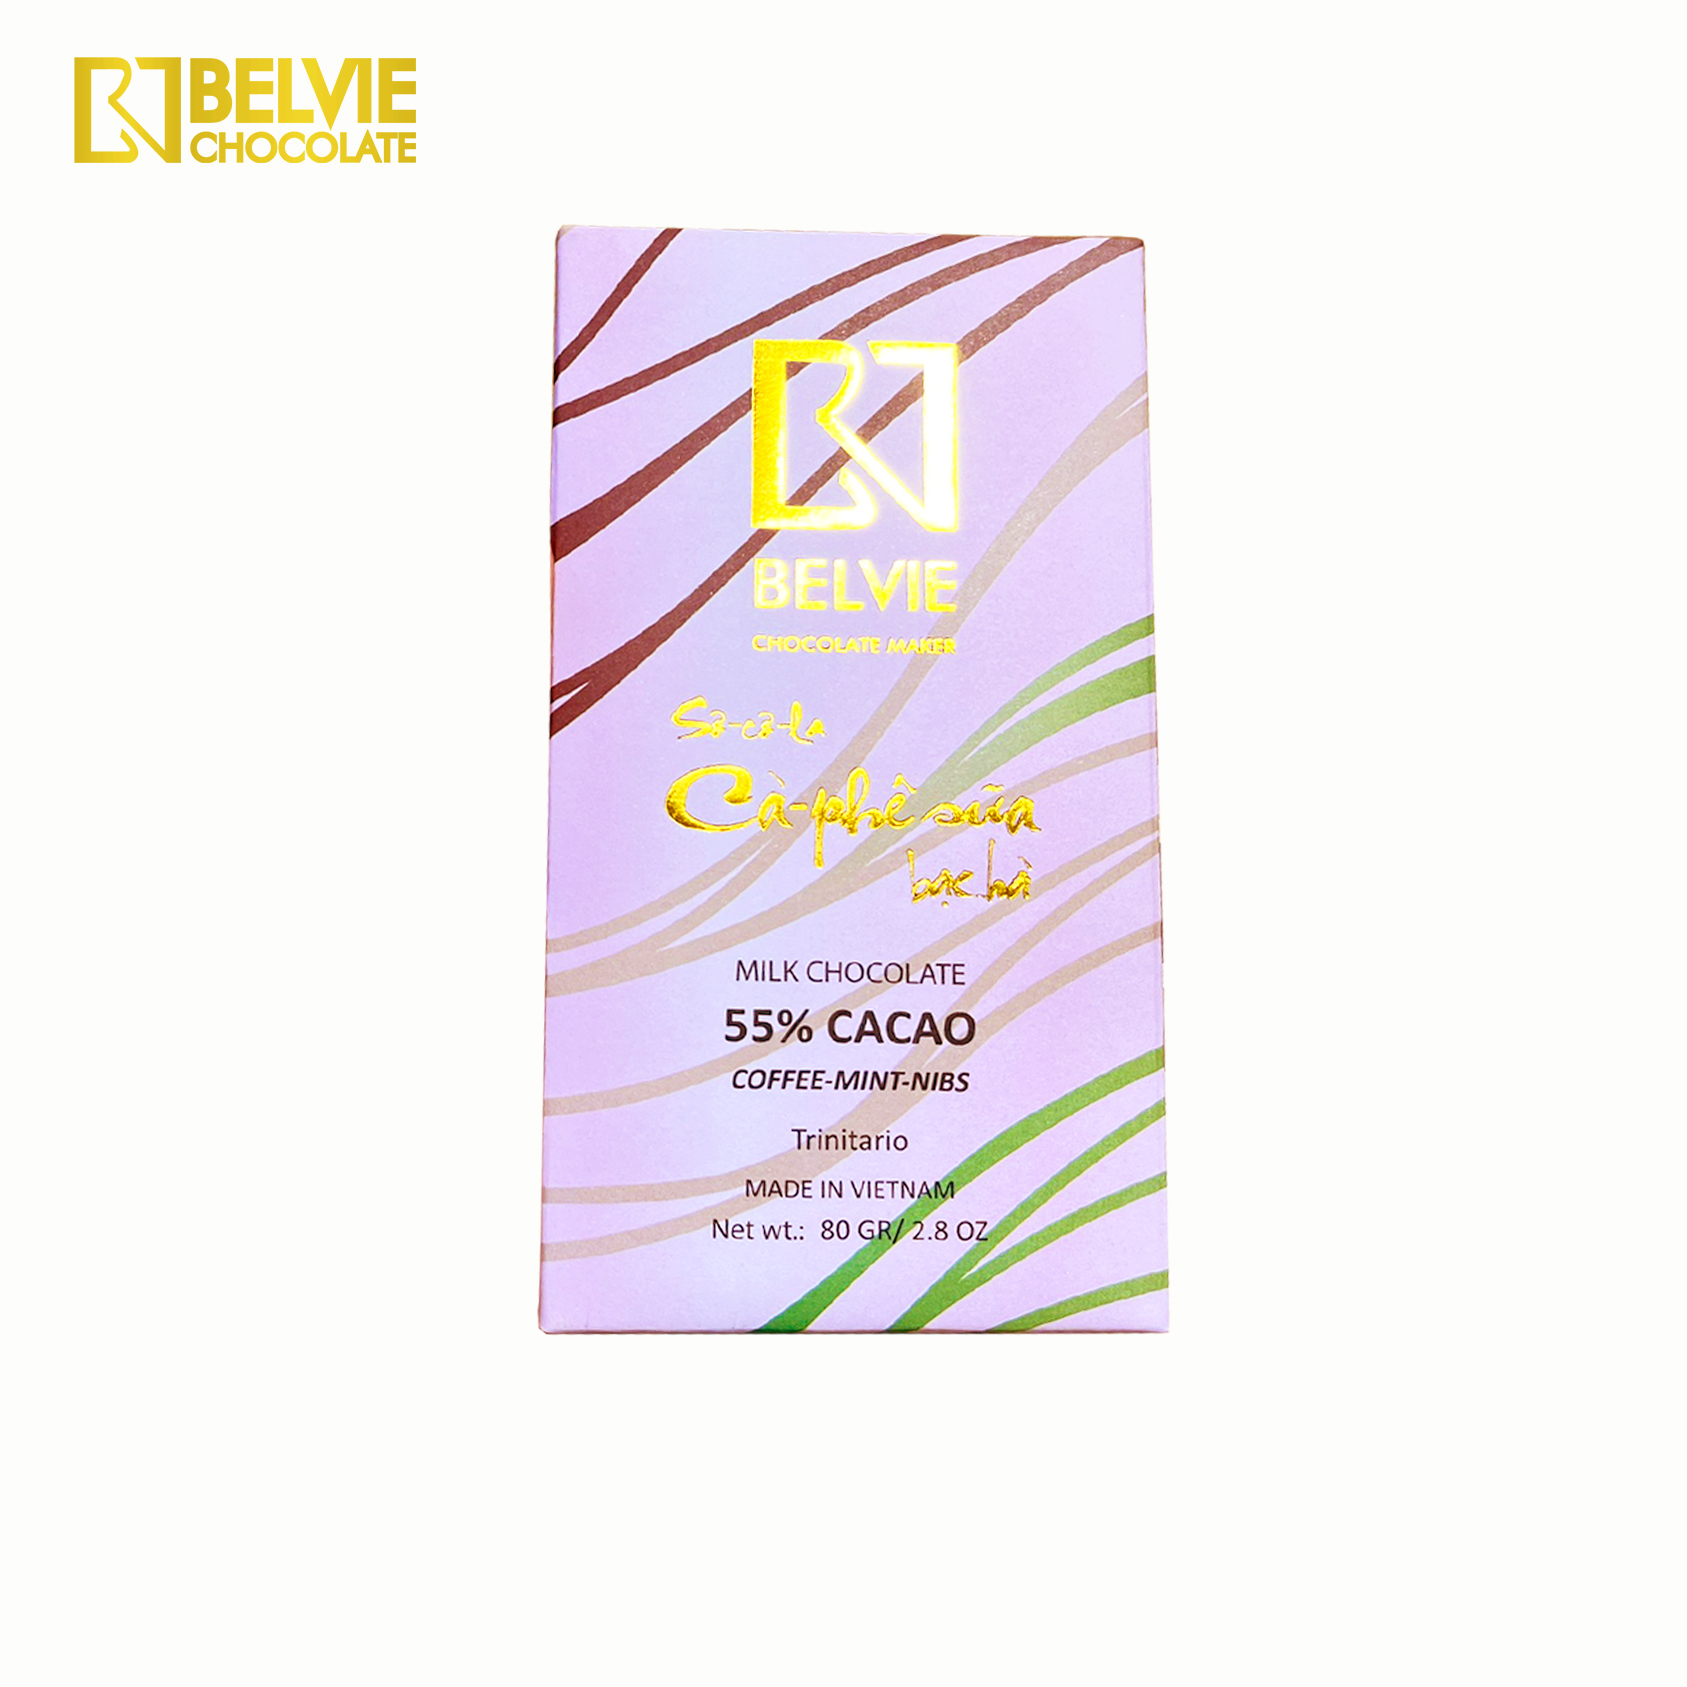 Belvie Coffee mint milk chocolate 55% cacao 80g